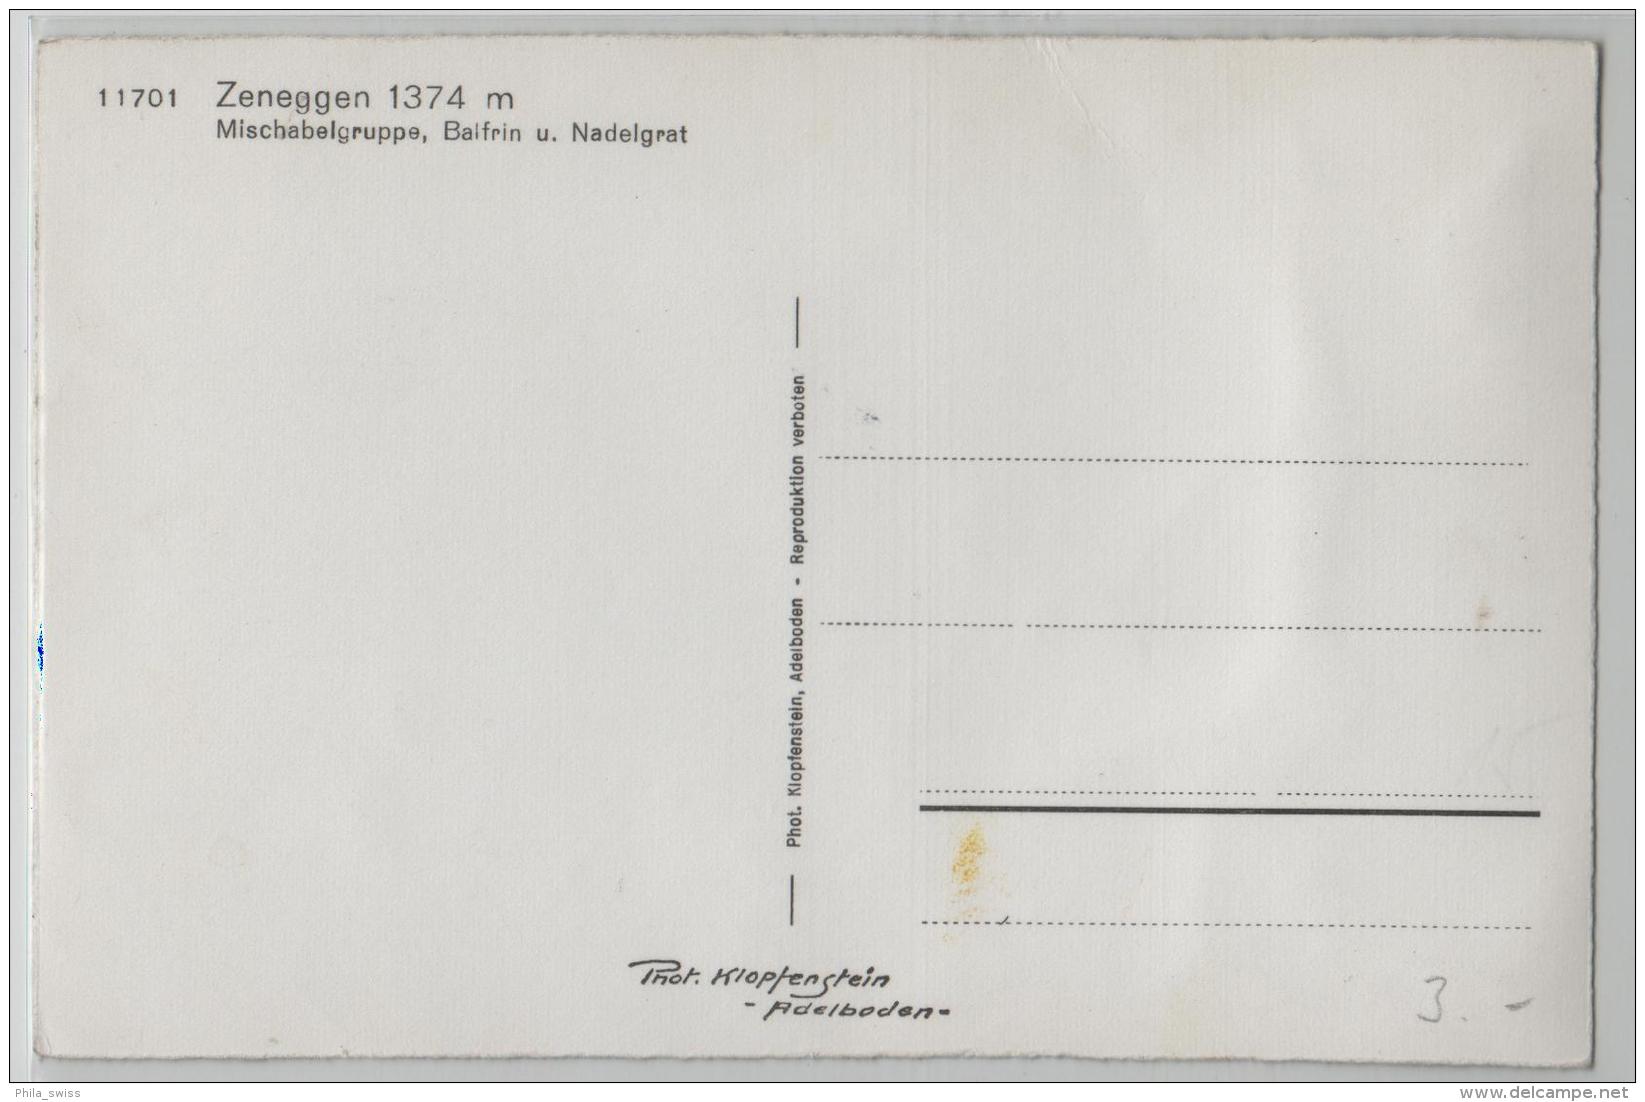 Zeneggen (1374 M) Michabelgruppe, Balfrin Und Nadelgrat - Photo: Klopfenstein No. 11701 - Zeneggen